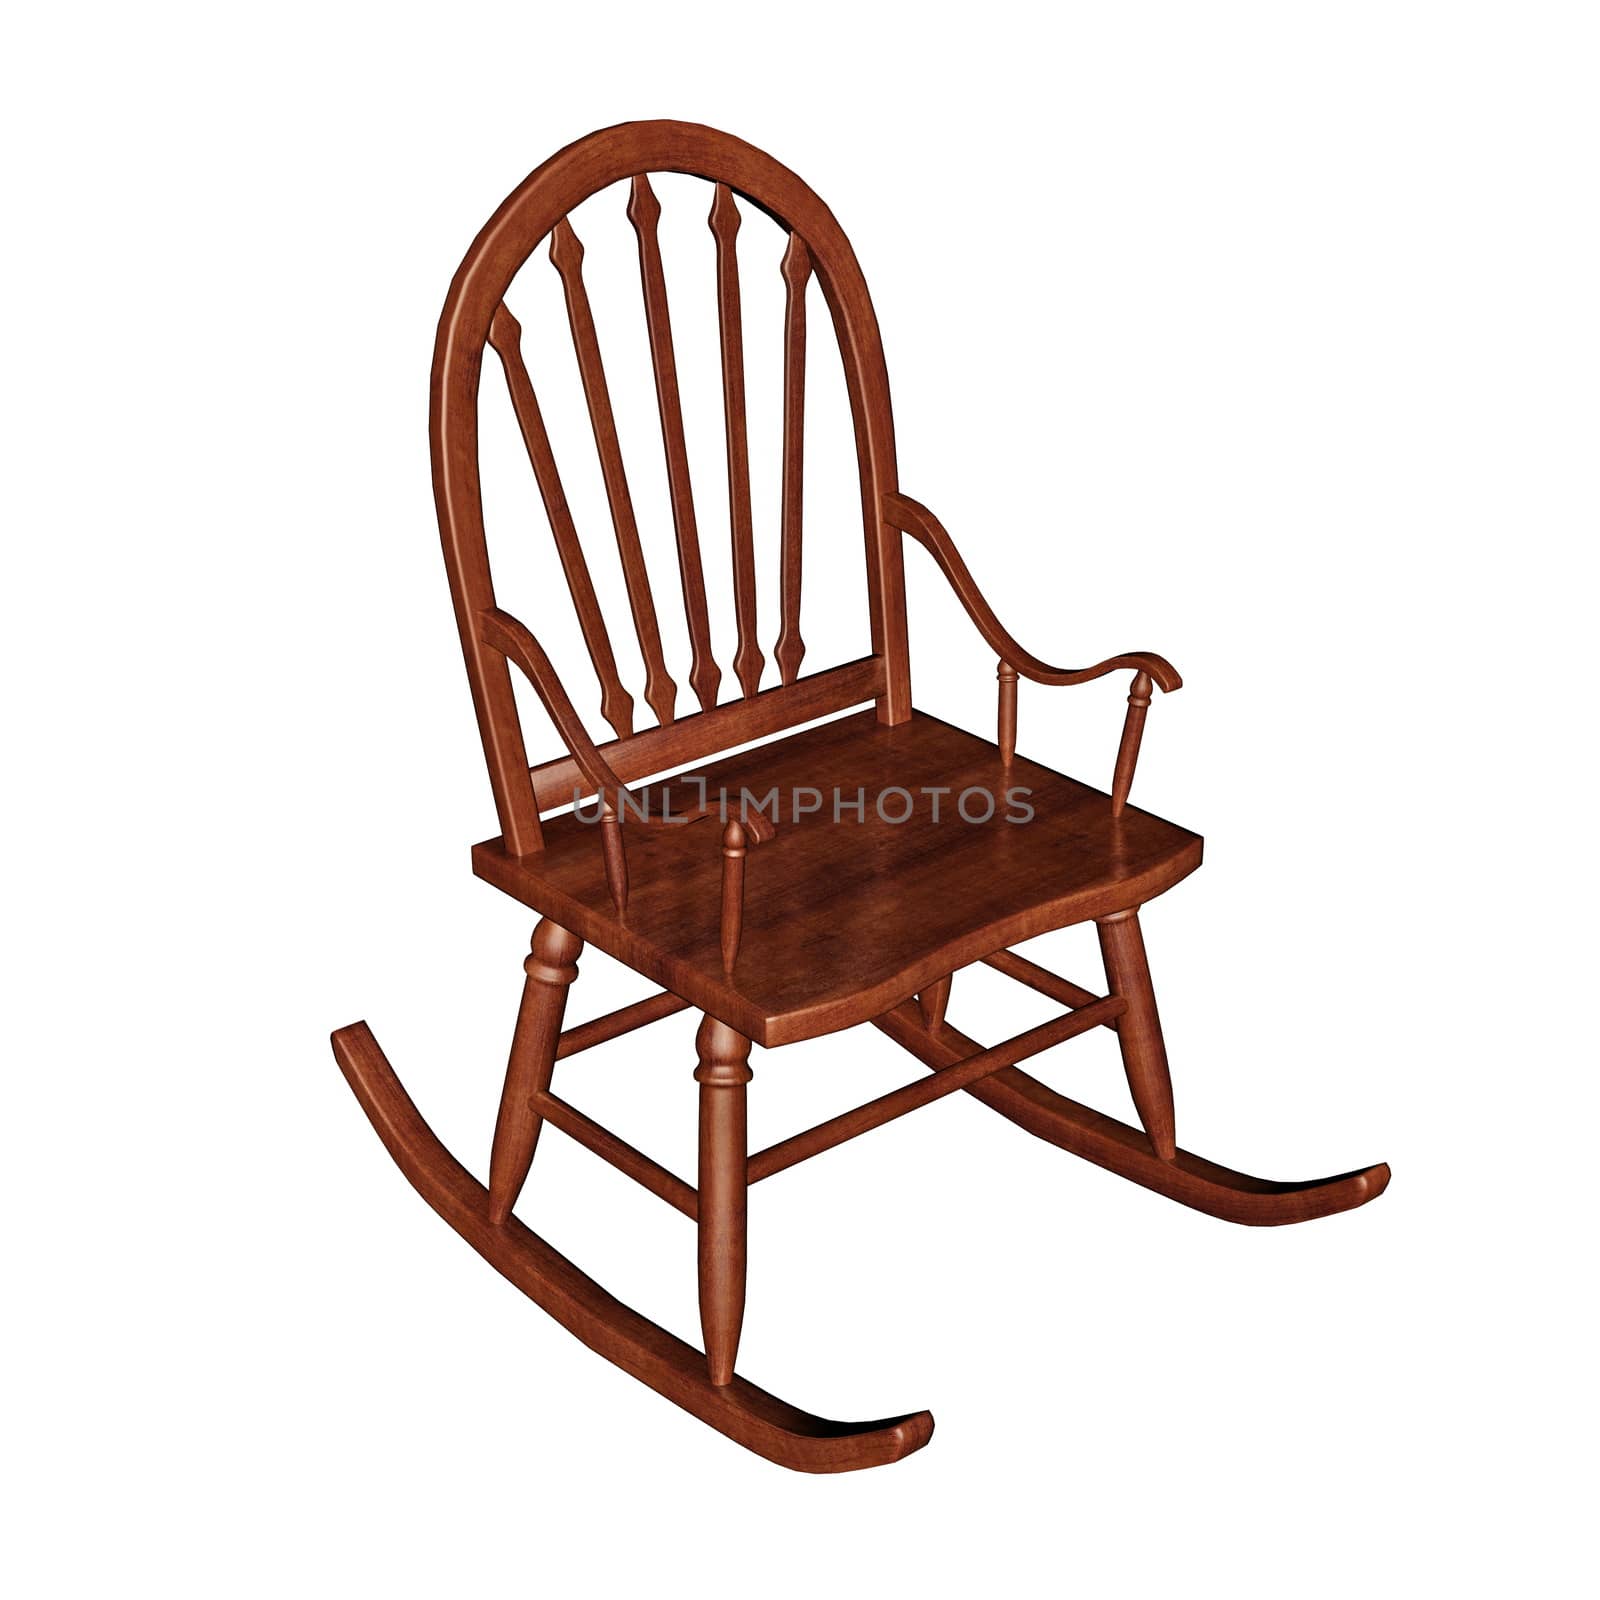 Rocking chair - 3D render by Elenaphotos21